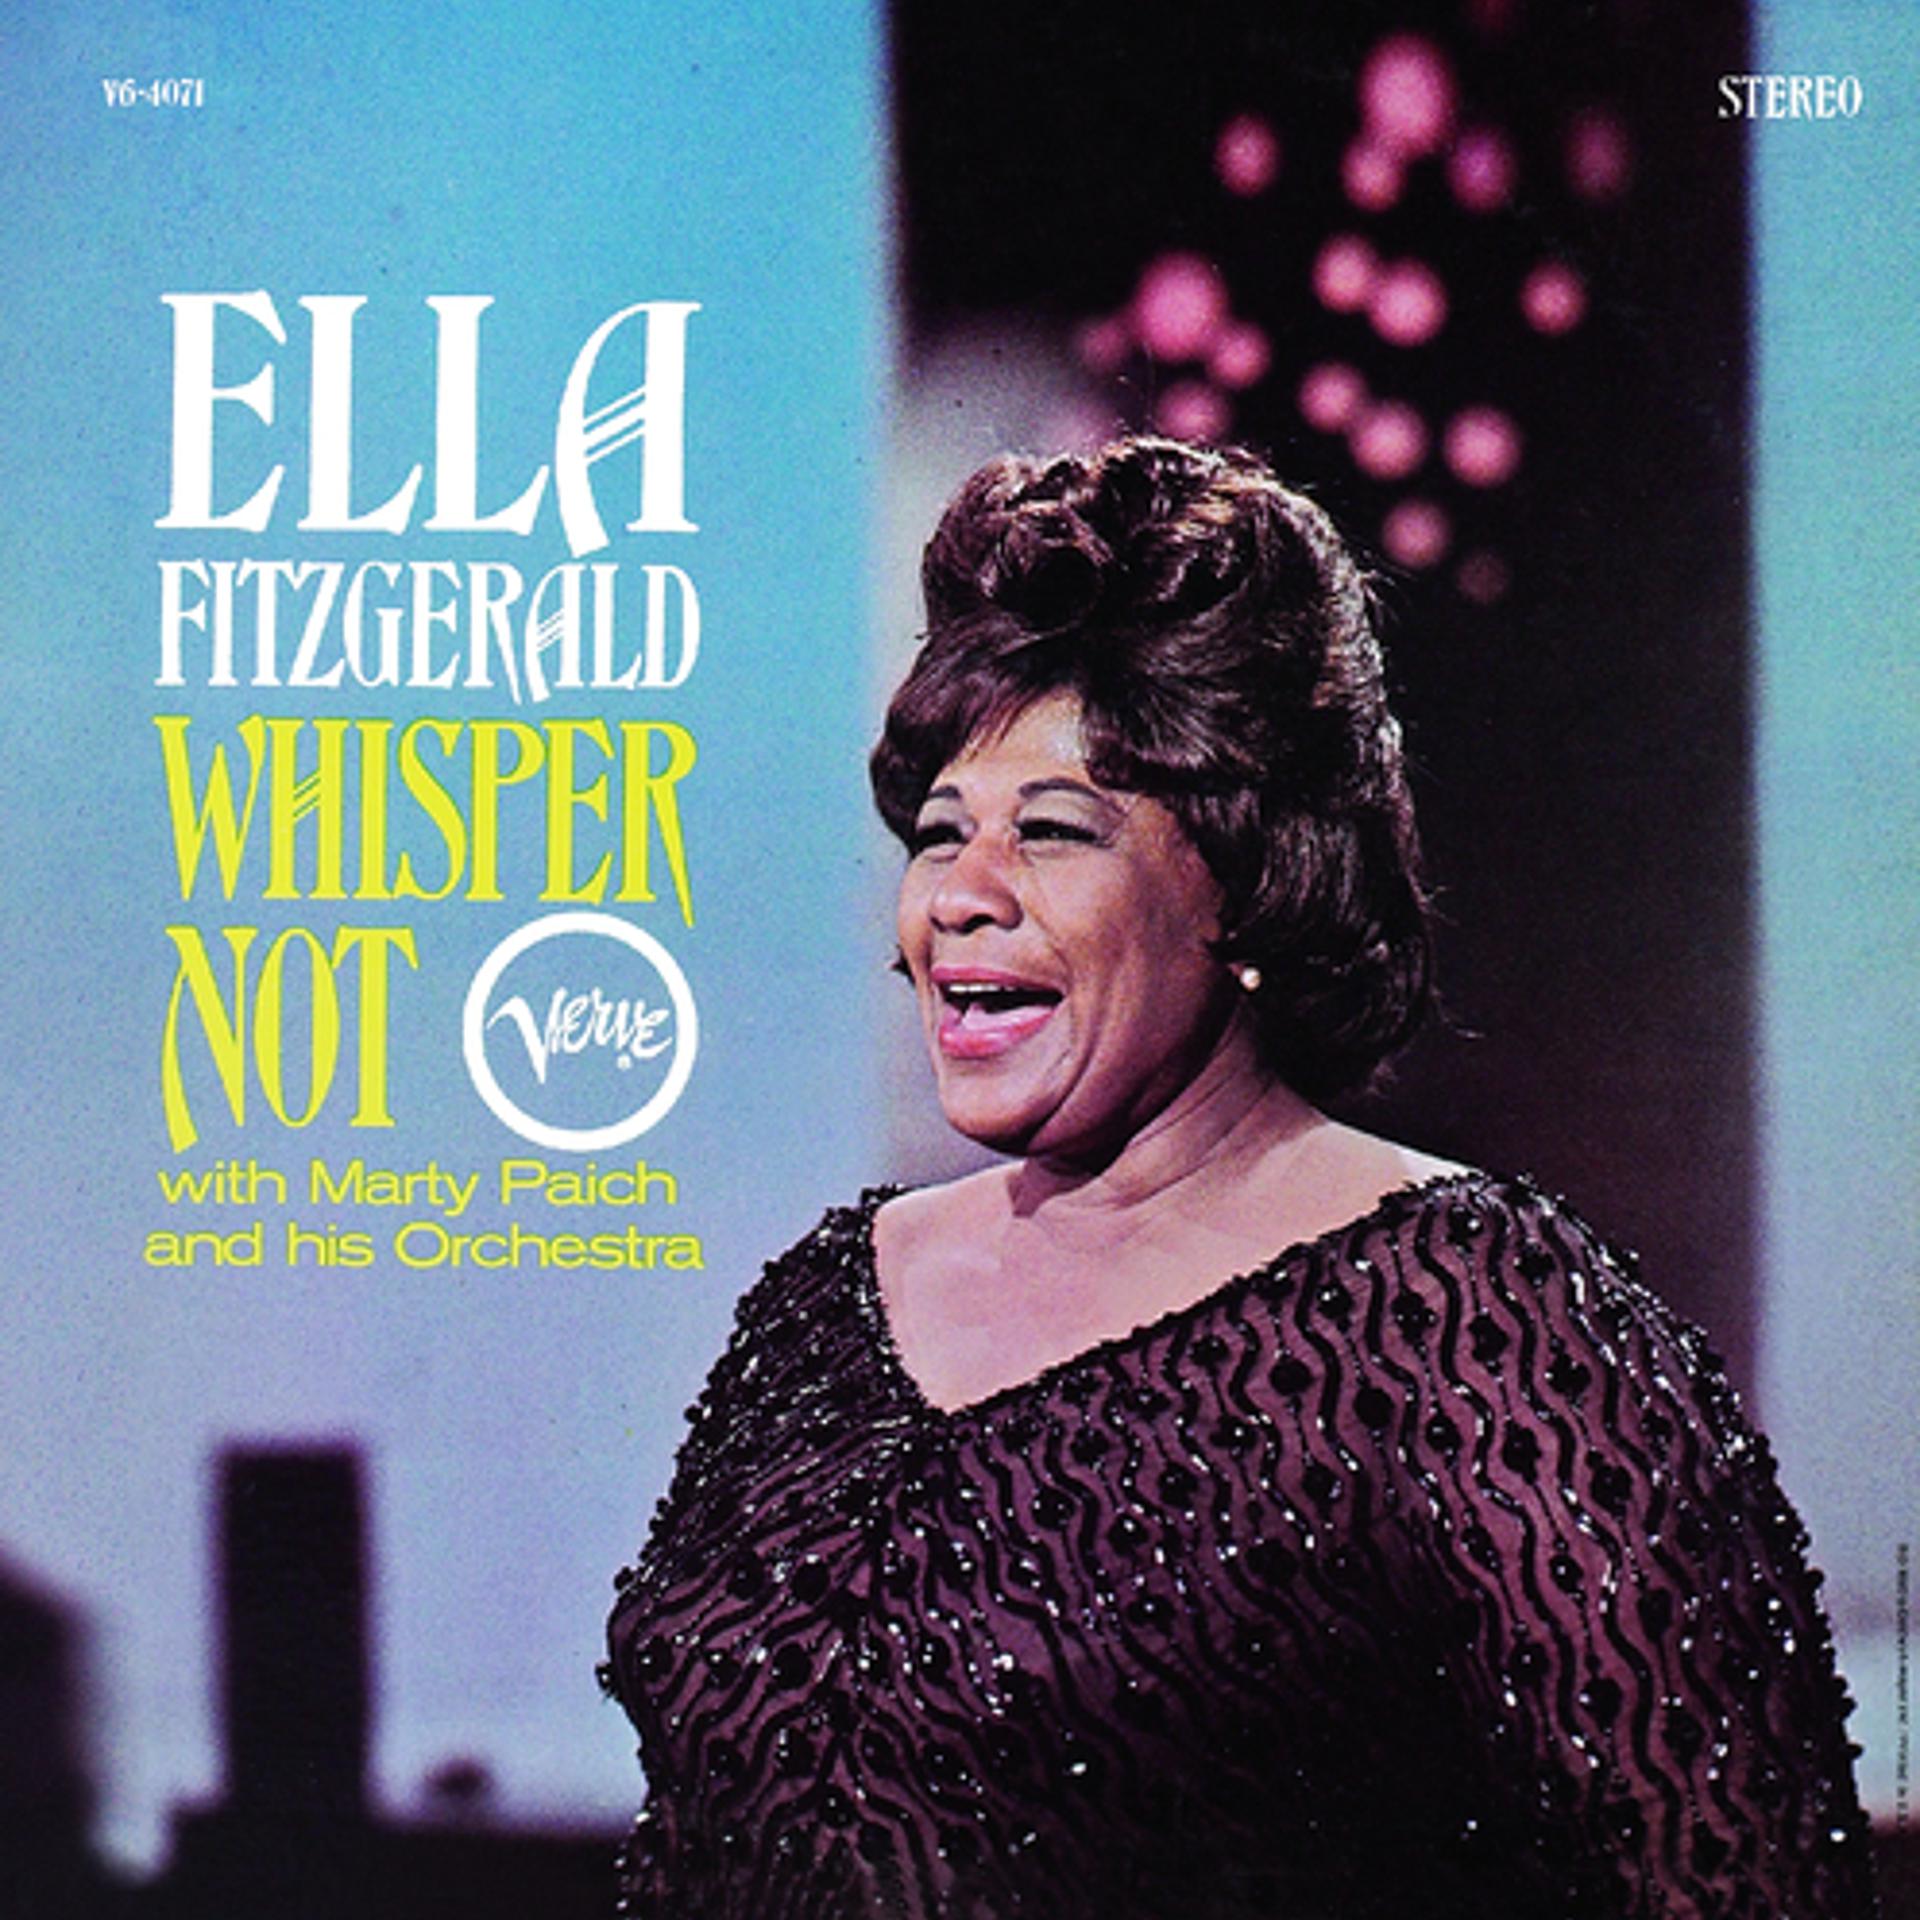 Постер к треку Ella Fitzgerald - Old McDonald